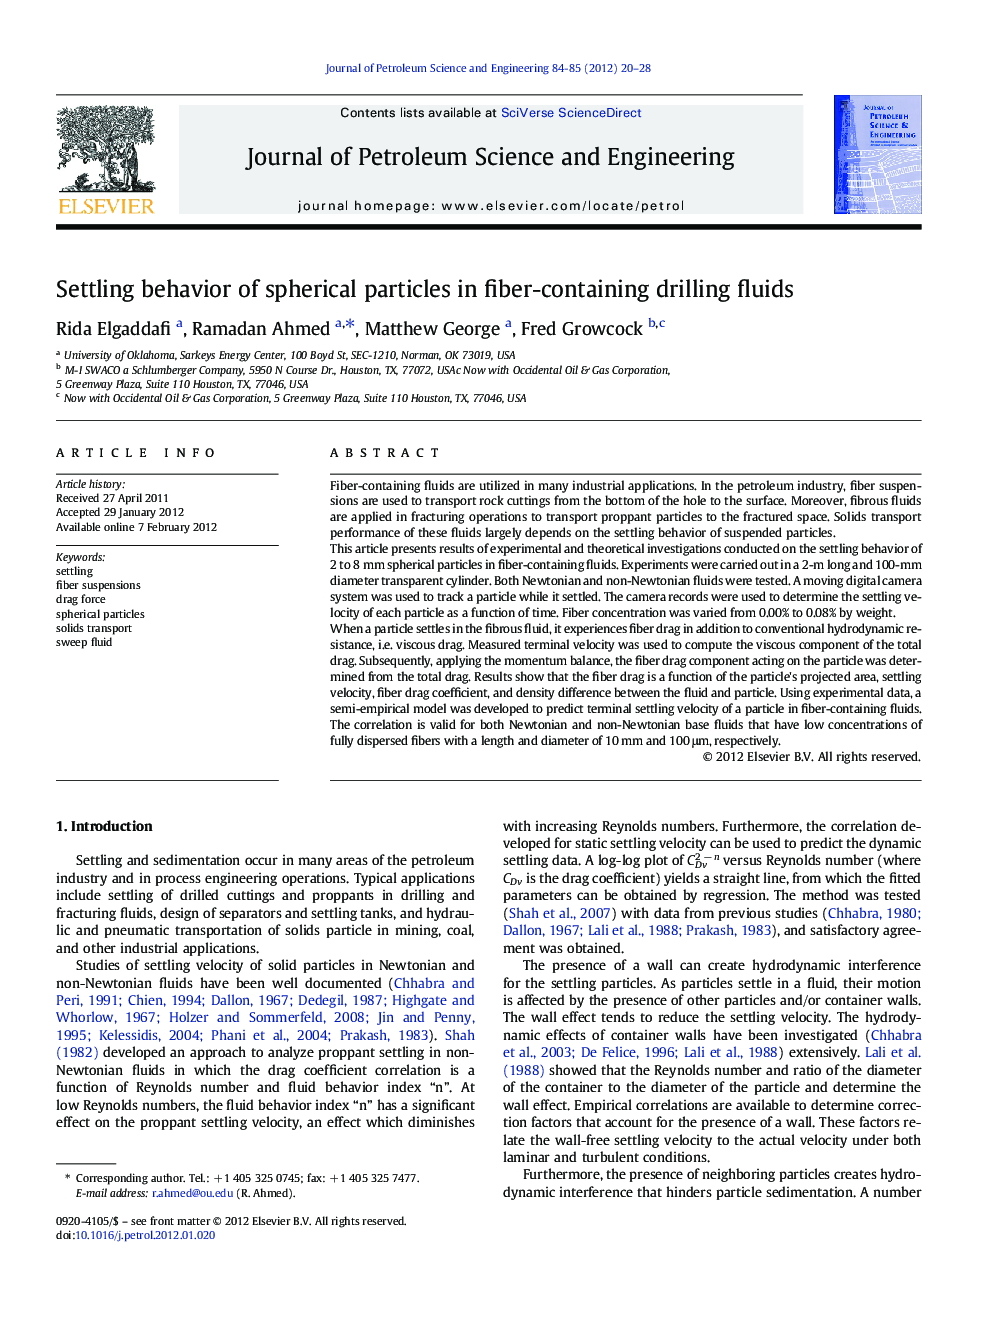 Settling behavior of spherical particles in fiber-containing drilling fluids